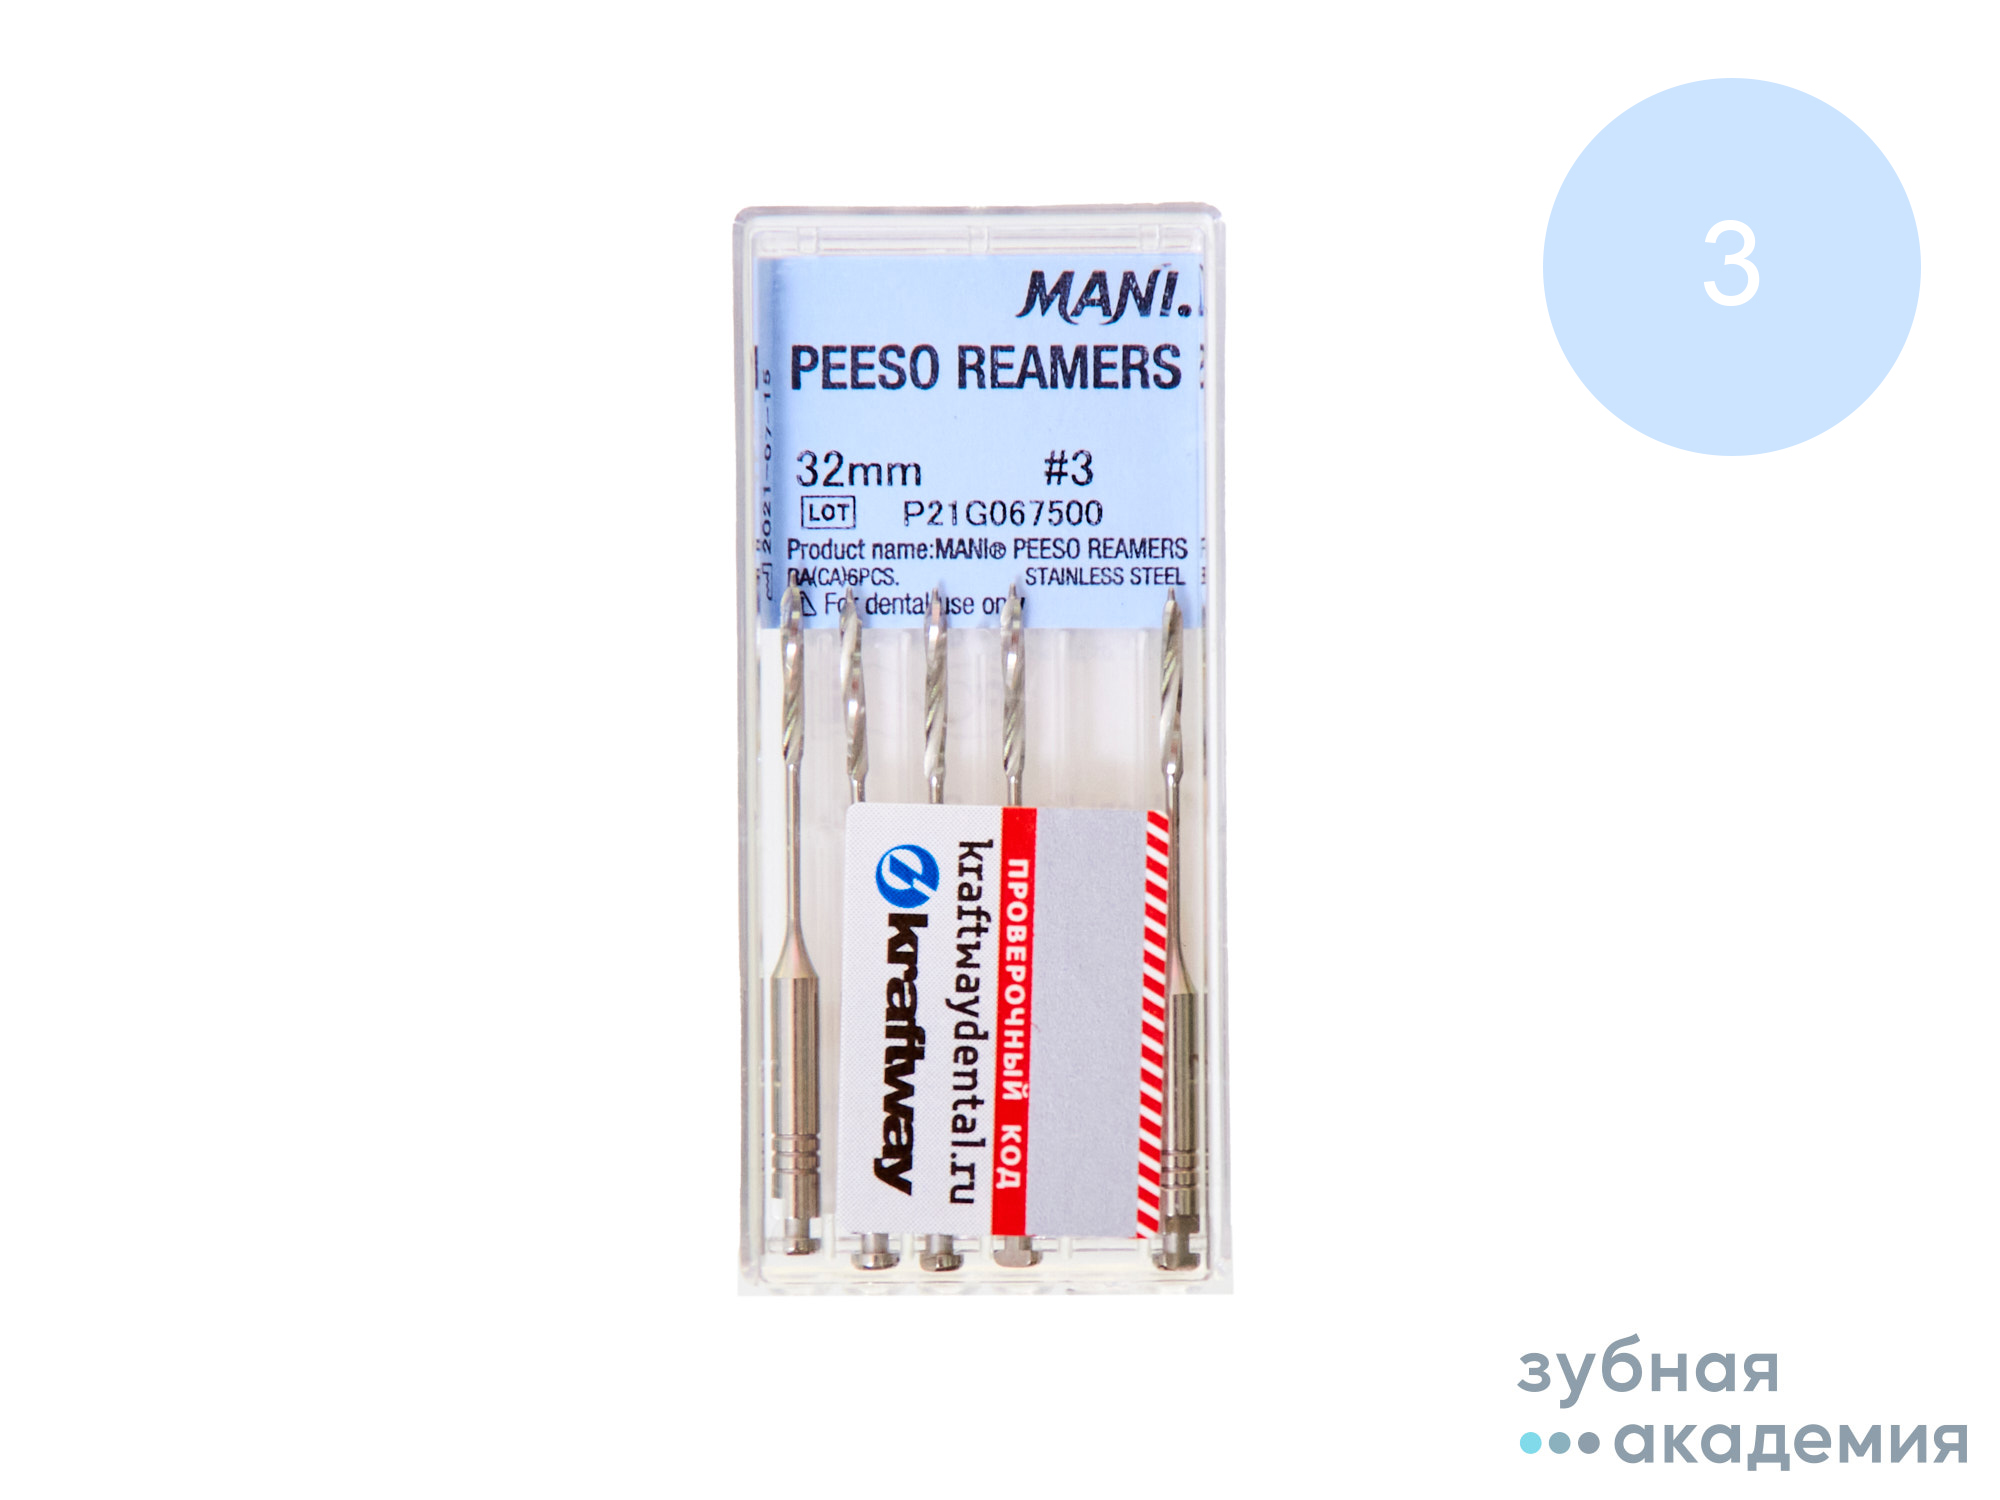 Peeso Reamers Пьезо римеры 28 мм №3 упаковка 6 шт /Mani/Япония